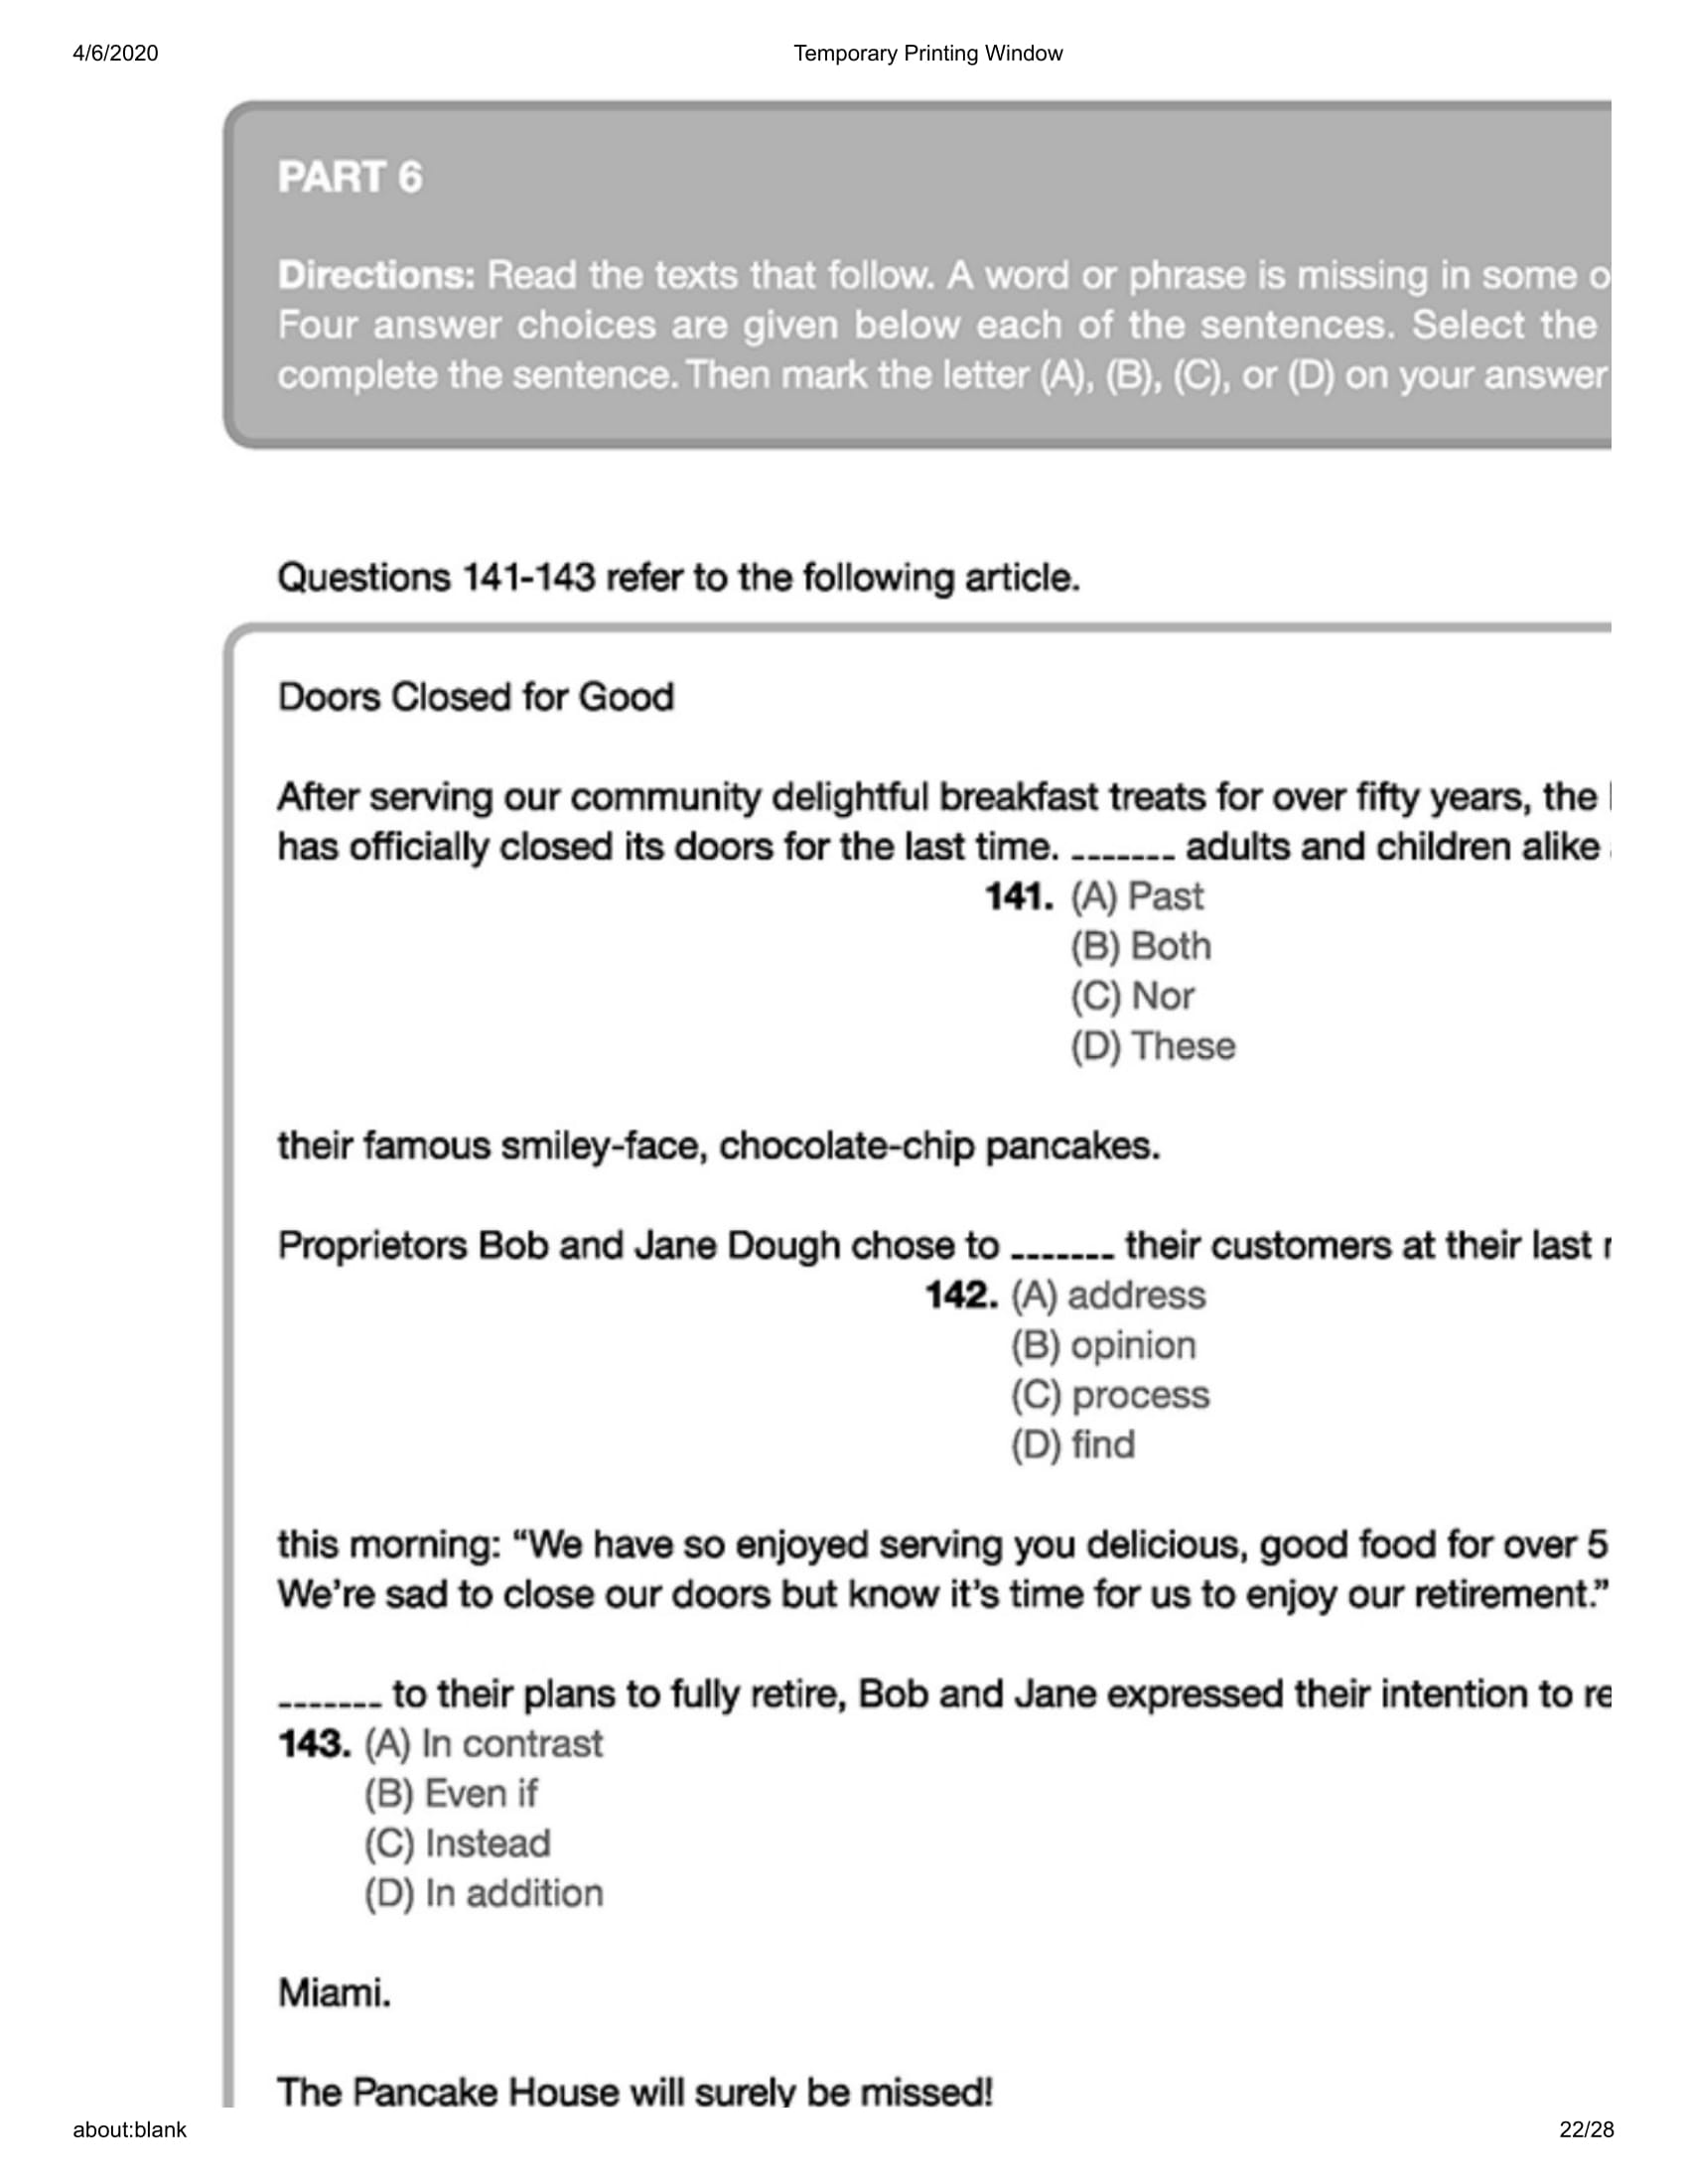 Comprehensive Toeic Training 1000 Practice Test Items Vol 3 - Kèm CD PDF